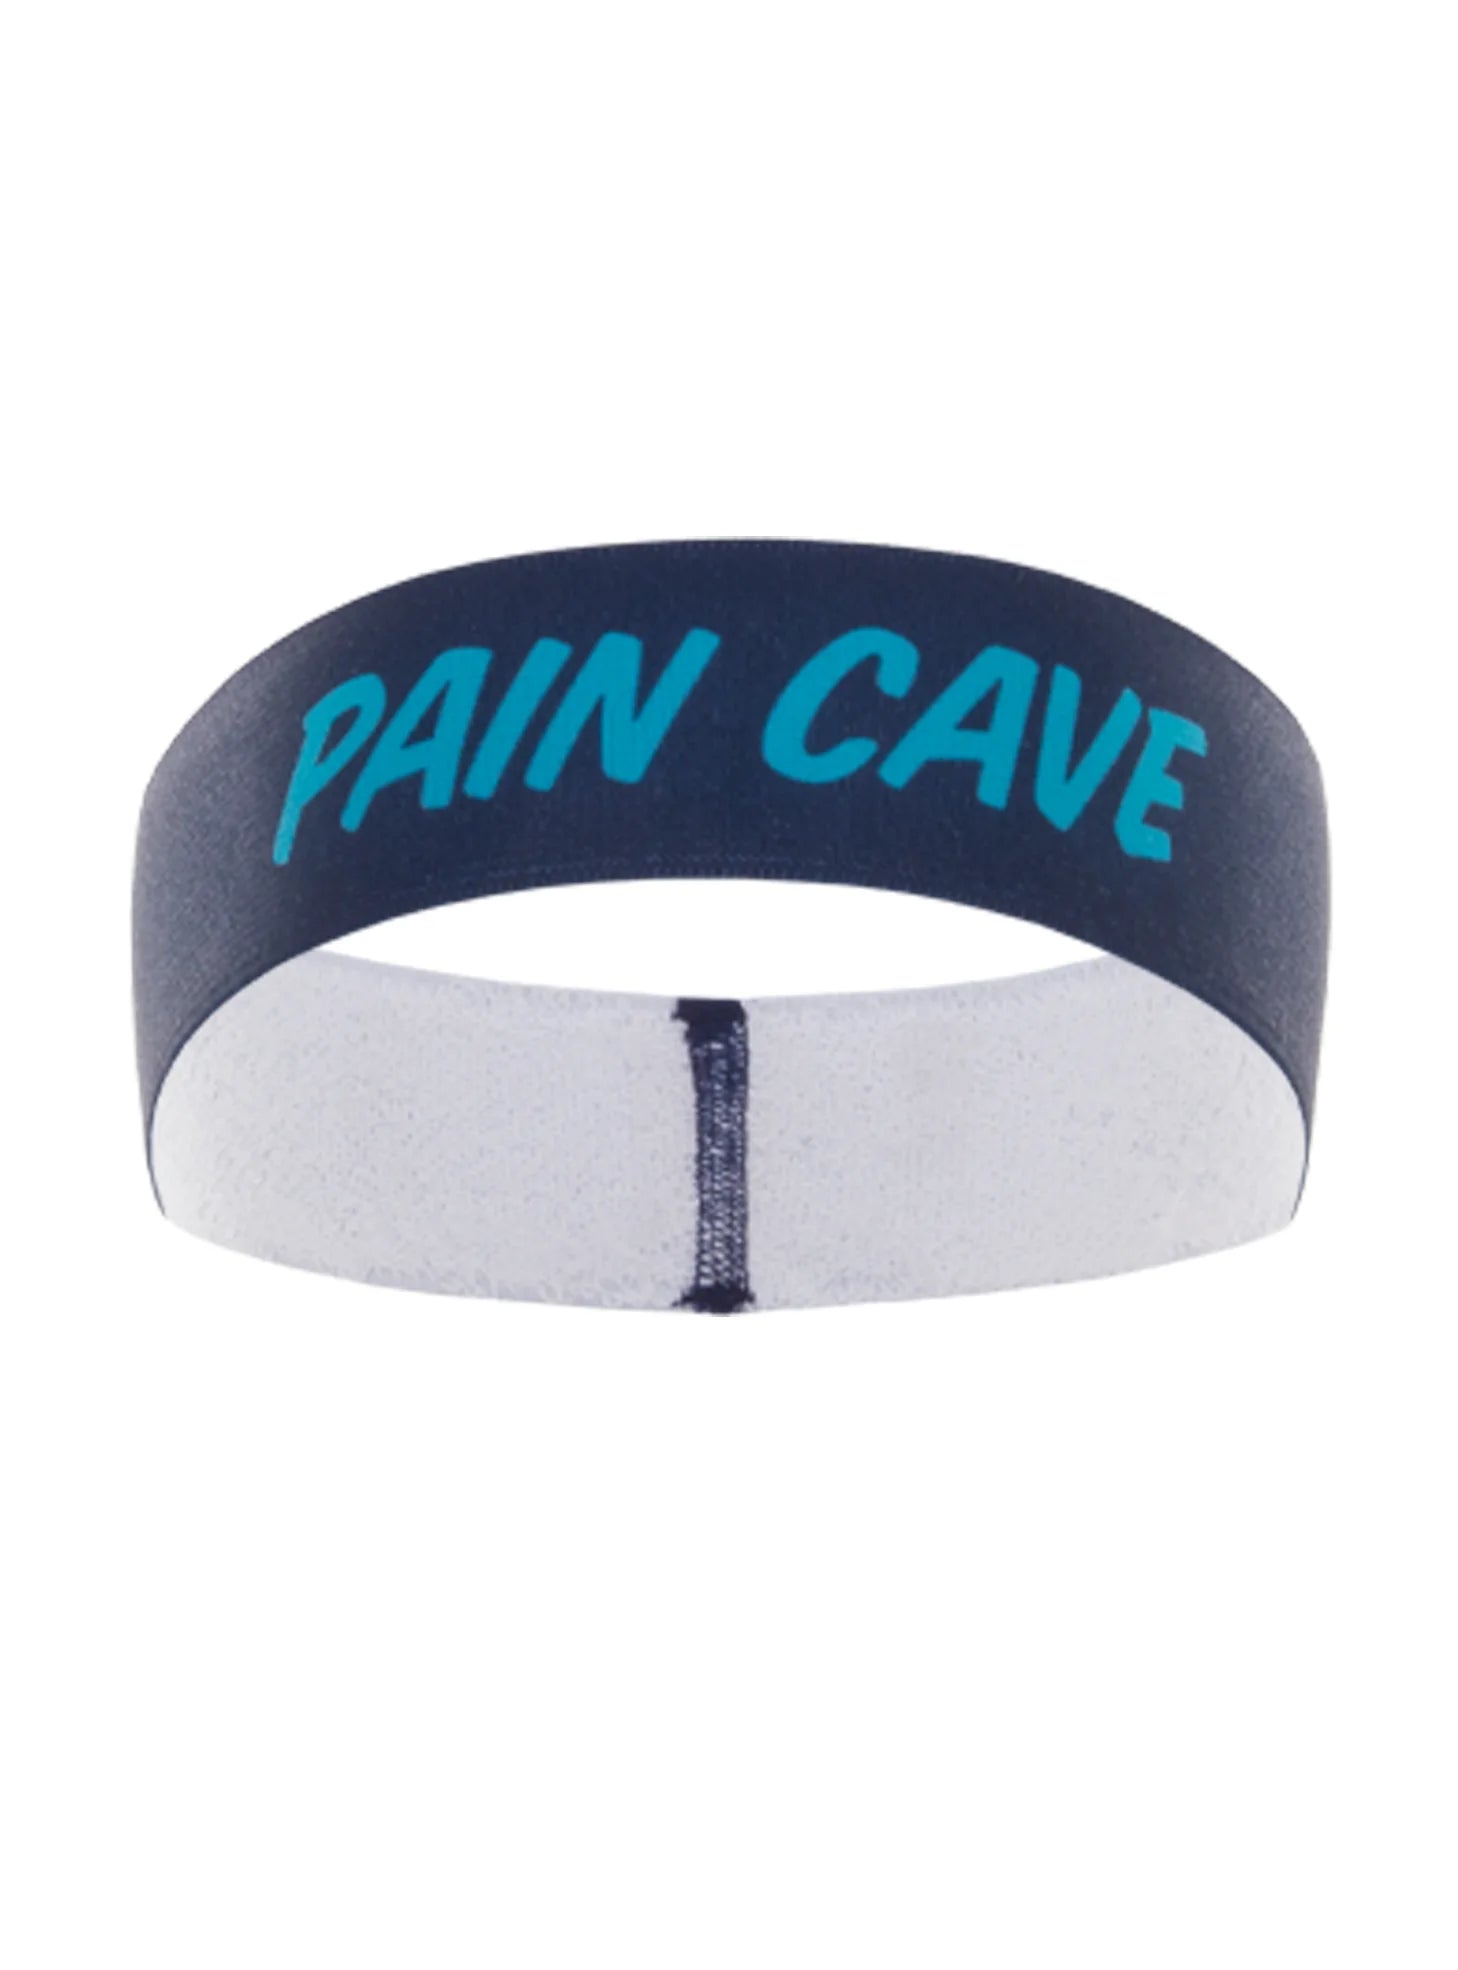 PAIN CAVE KIT with FREE TURBO Towel & Headband - MEN BLUE